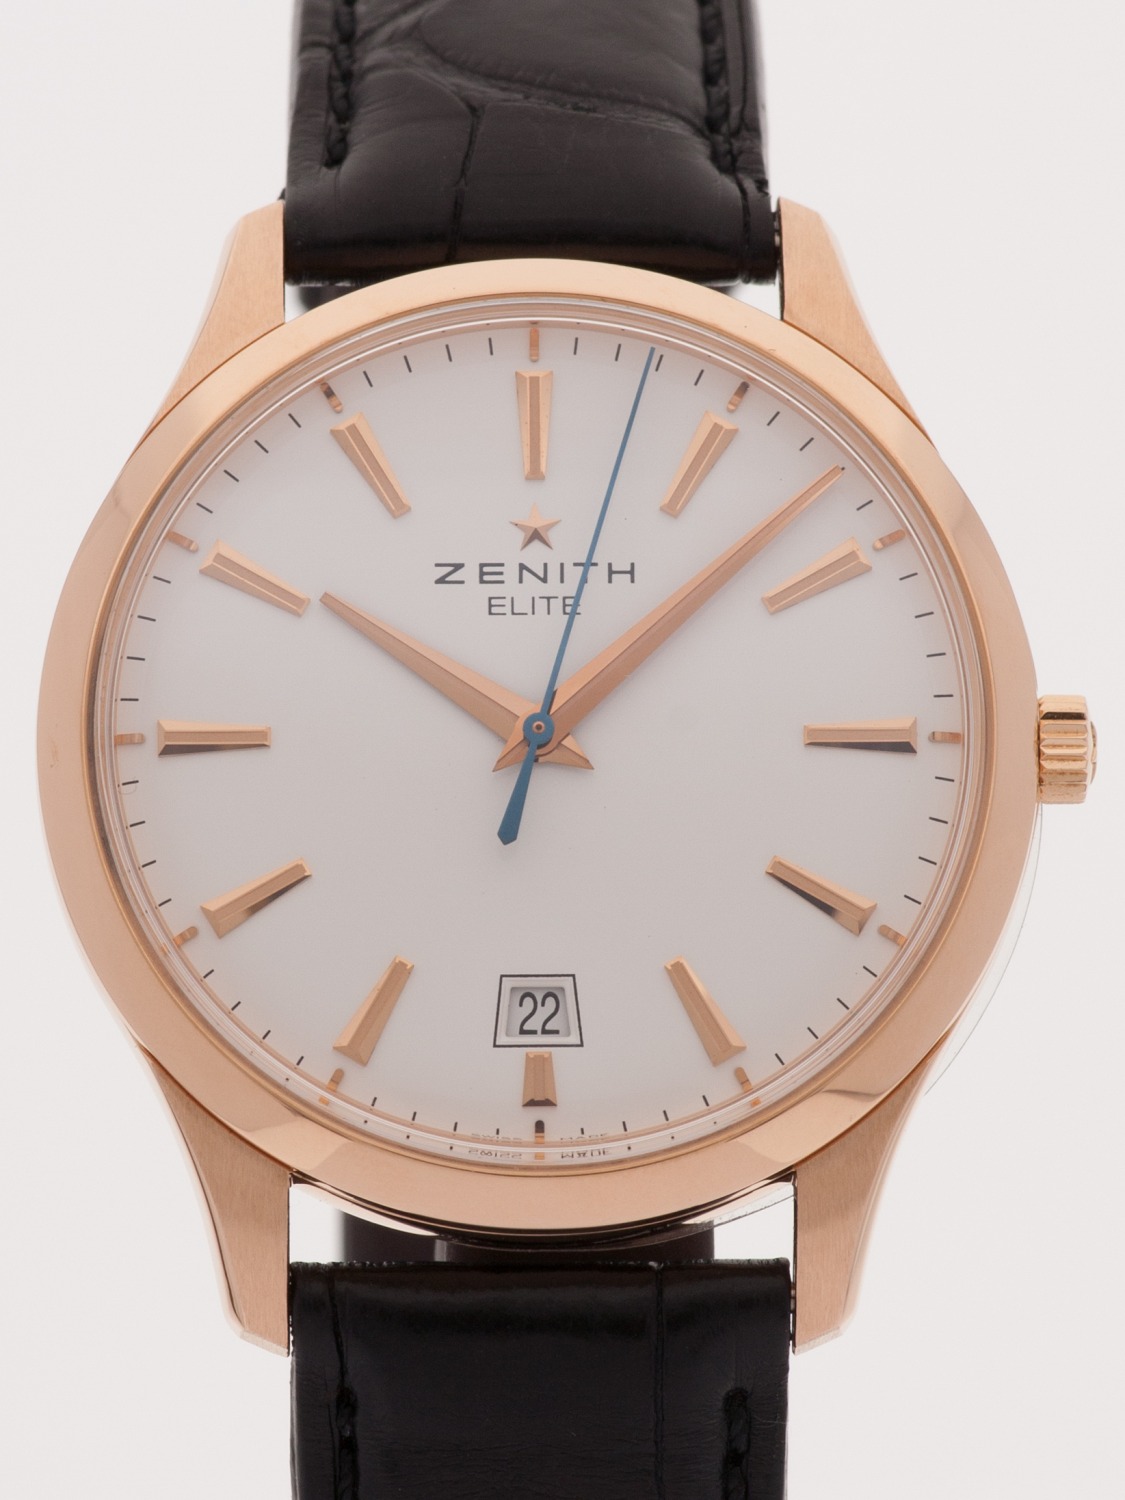 Zenith Elite Captain Central Second 40 MM watch, rose gold